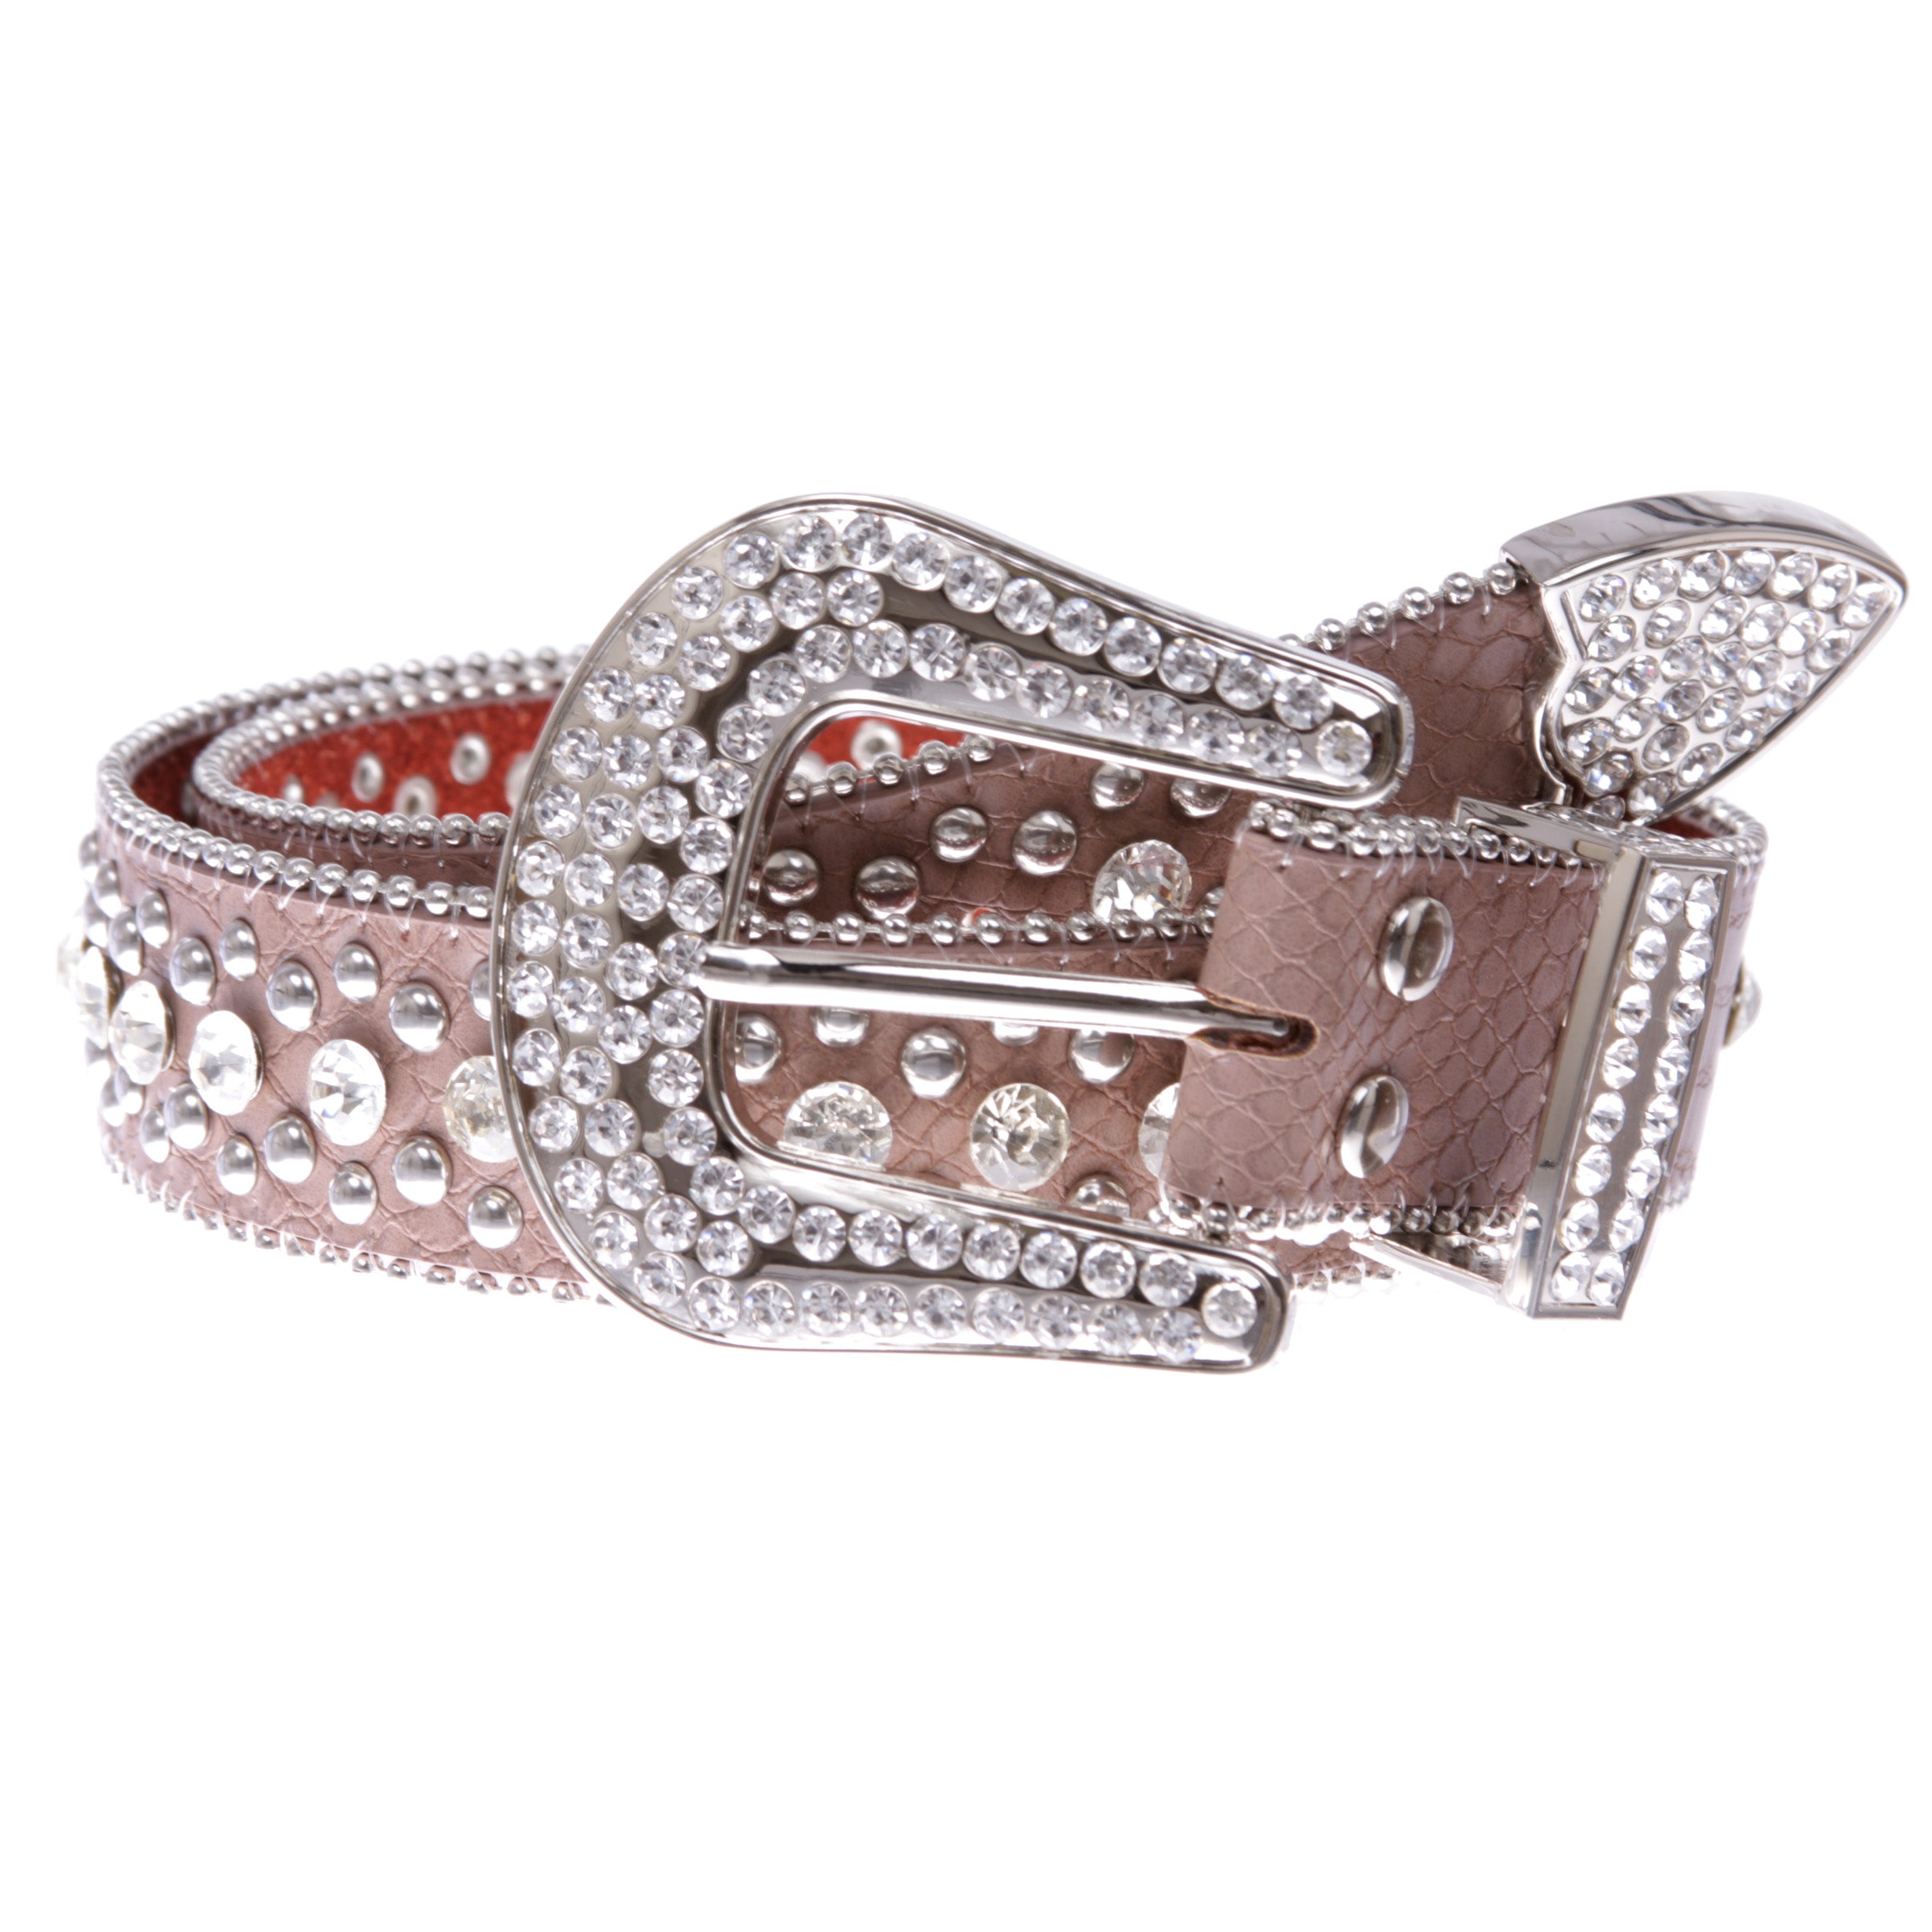 Women's Western Cowgirl Alligator Rhinestone Studded Leather Belt